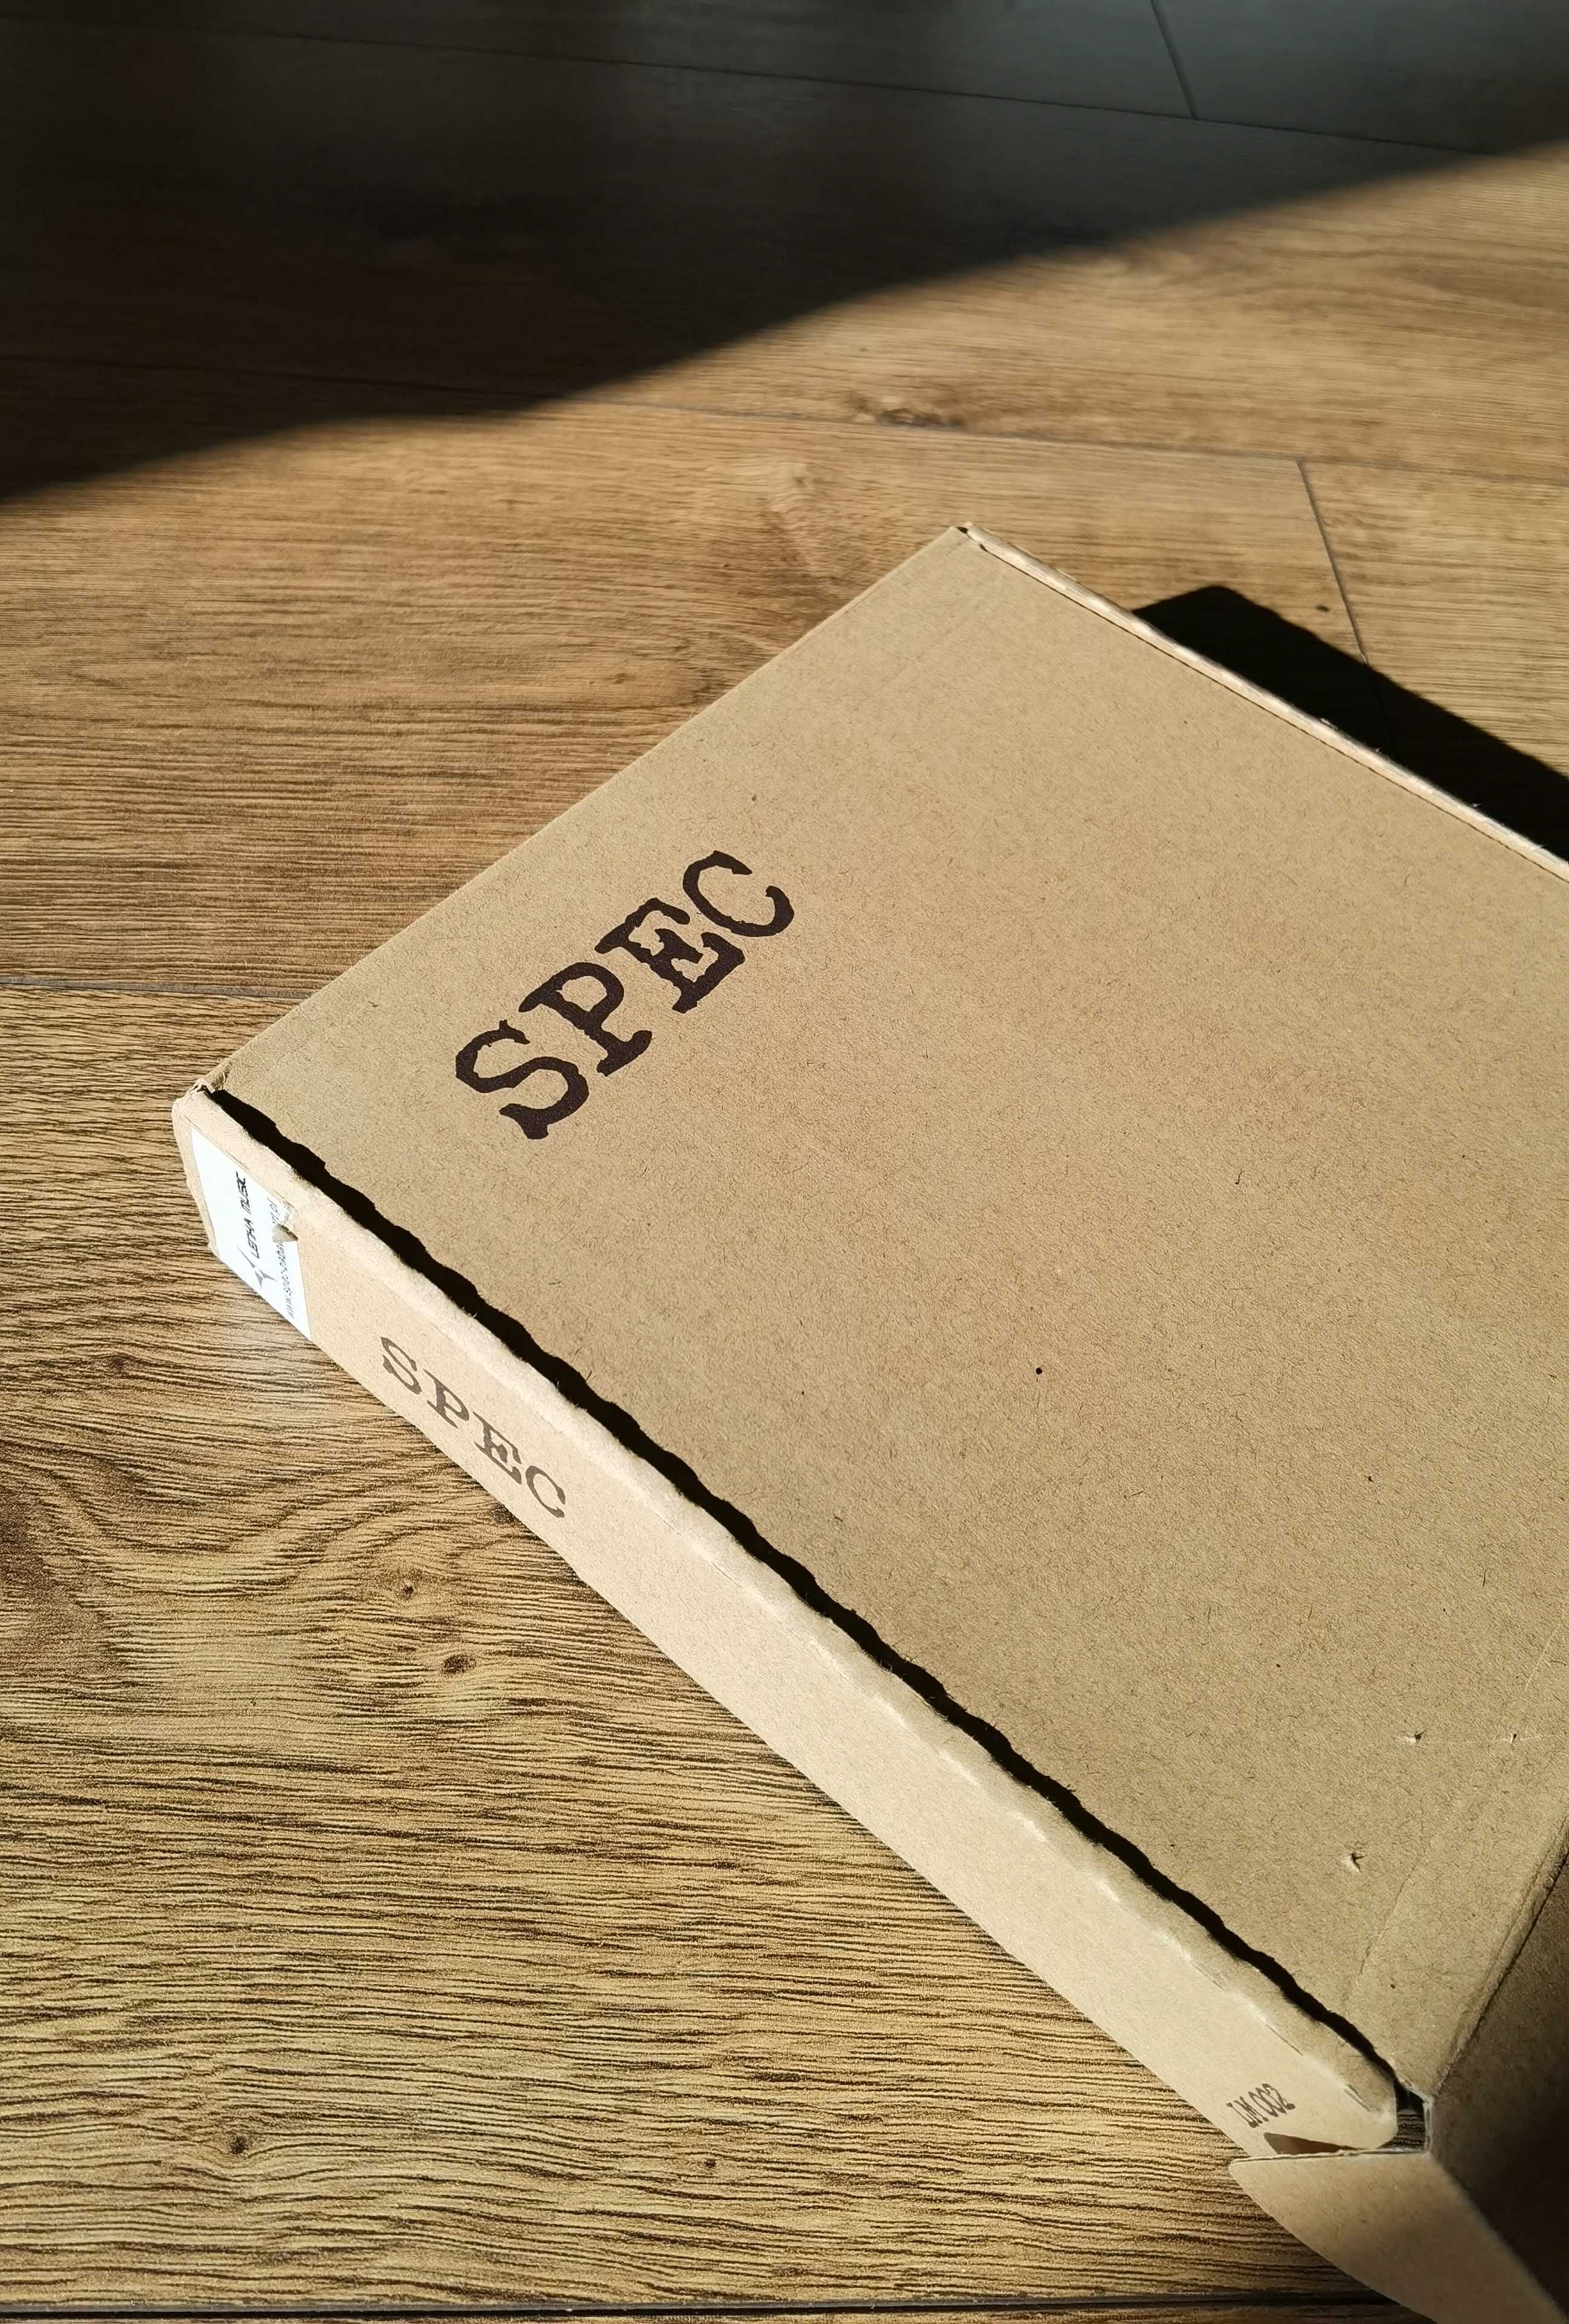 SPEC (Kazik Staszewski, El Dupa) - CD Box Unikat